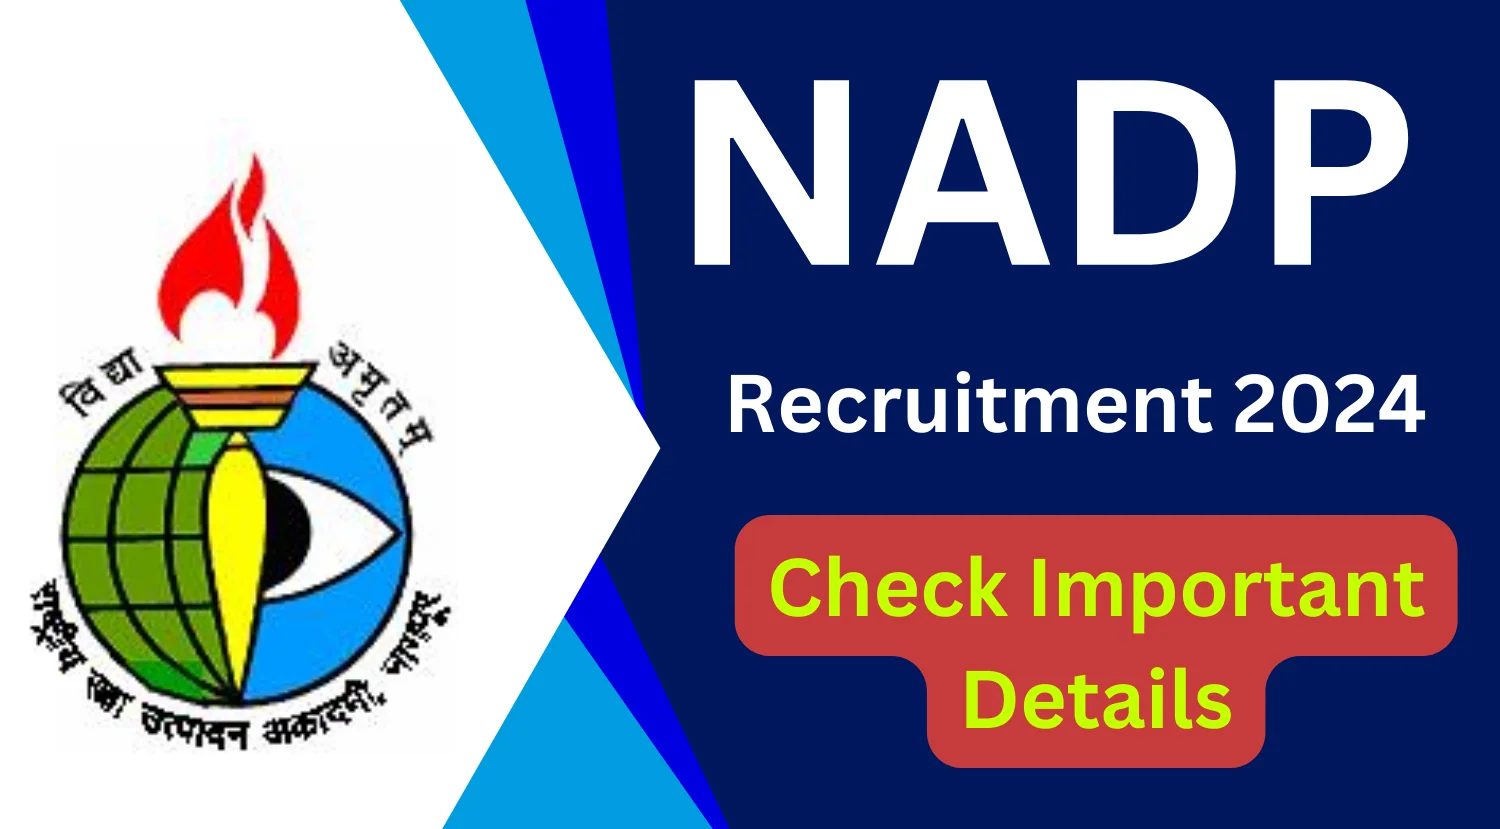 NADP Recruitment 2024